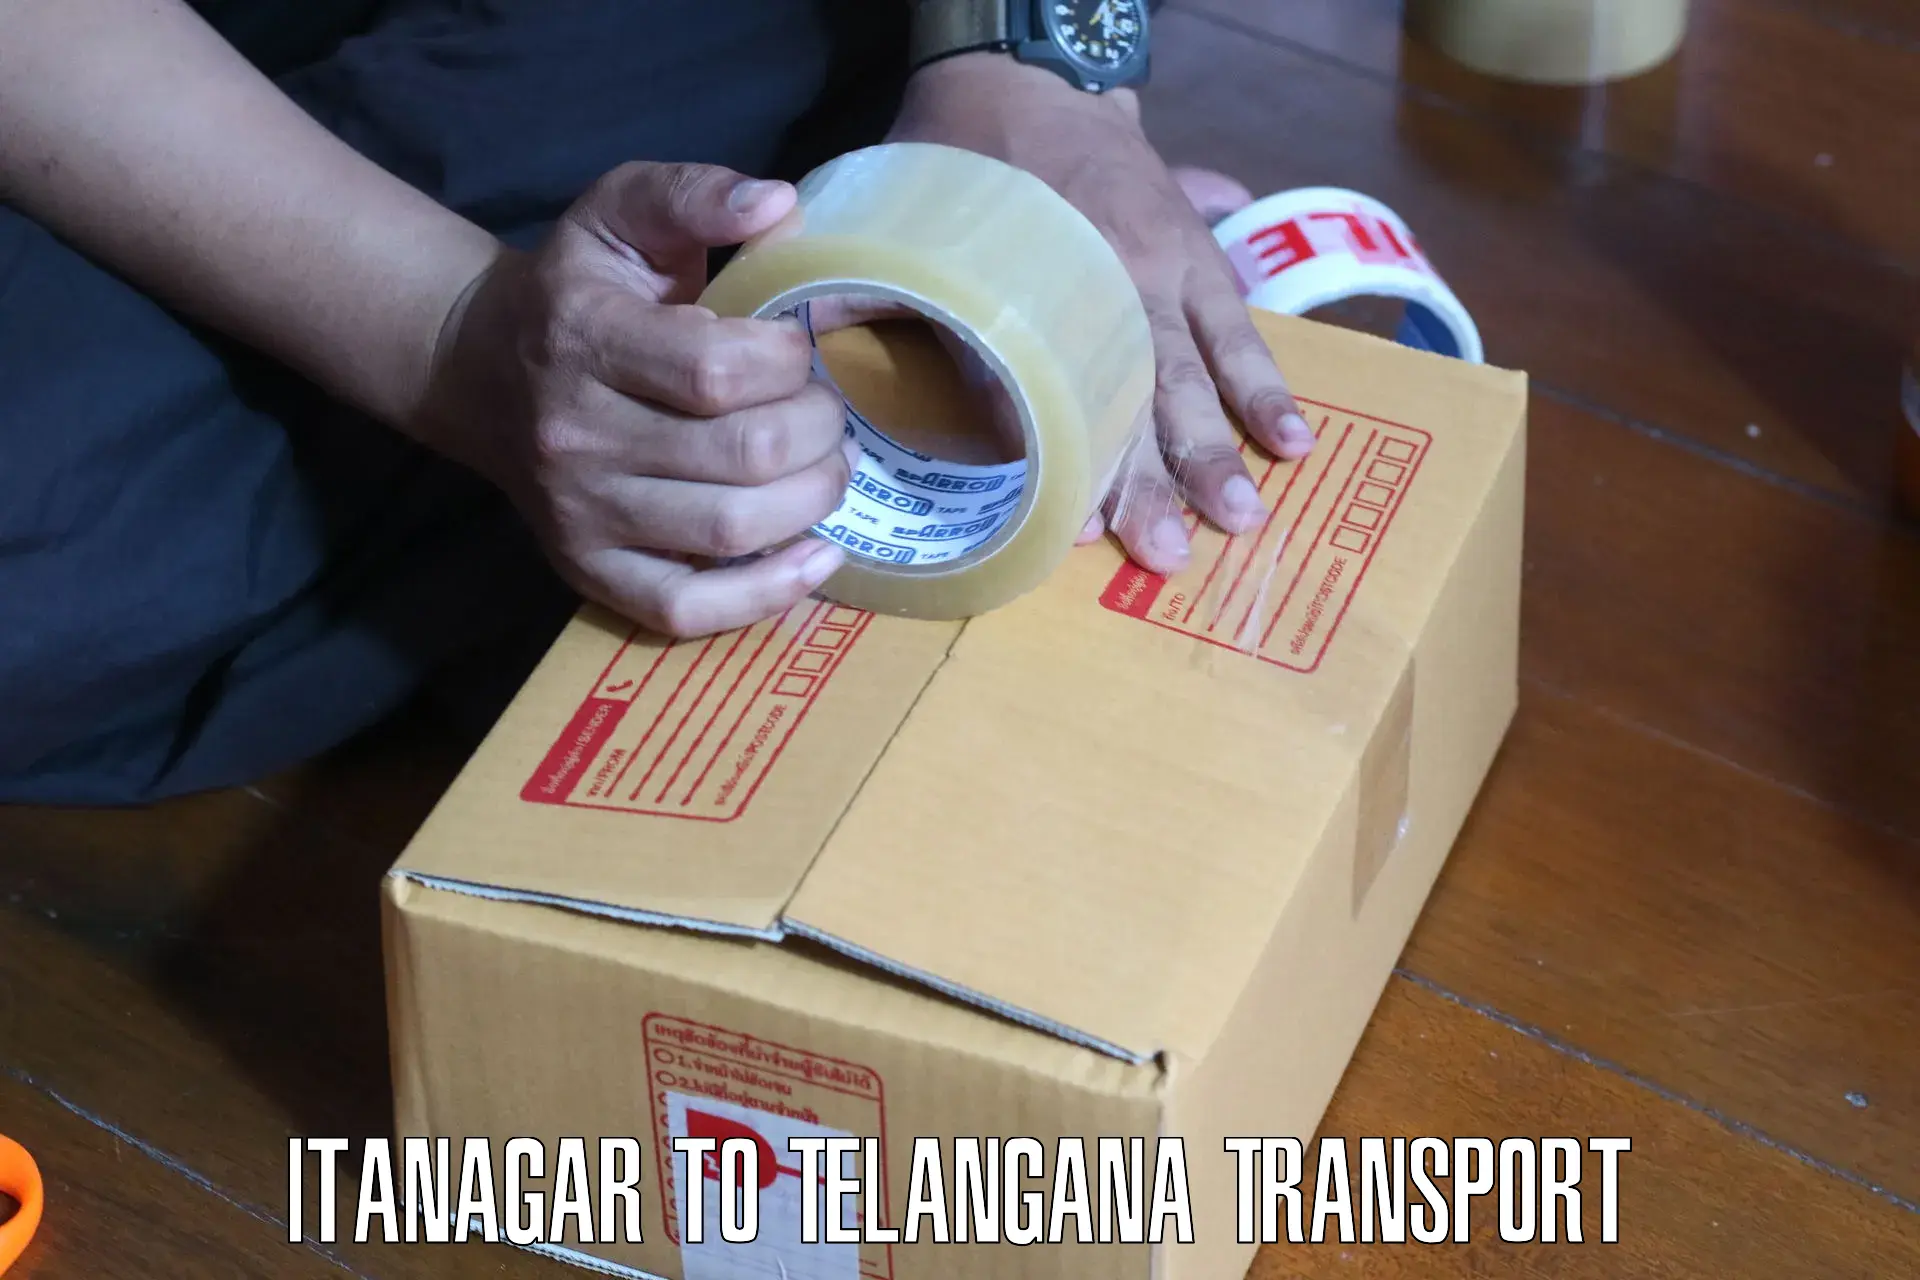 Shipping partner Itanagar to Devarakonda